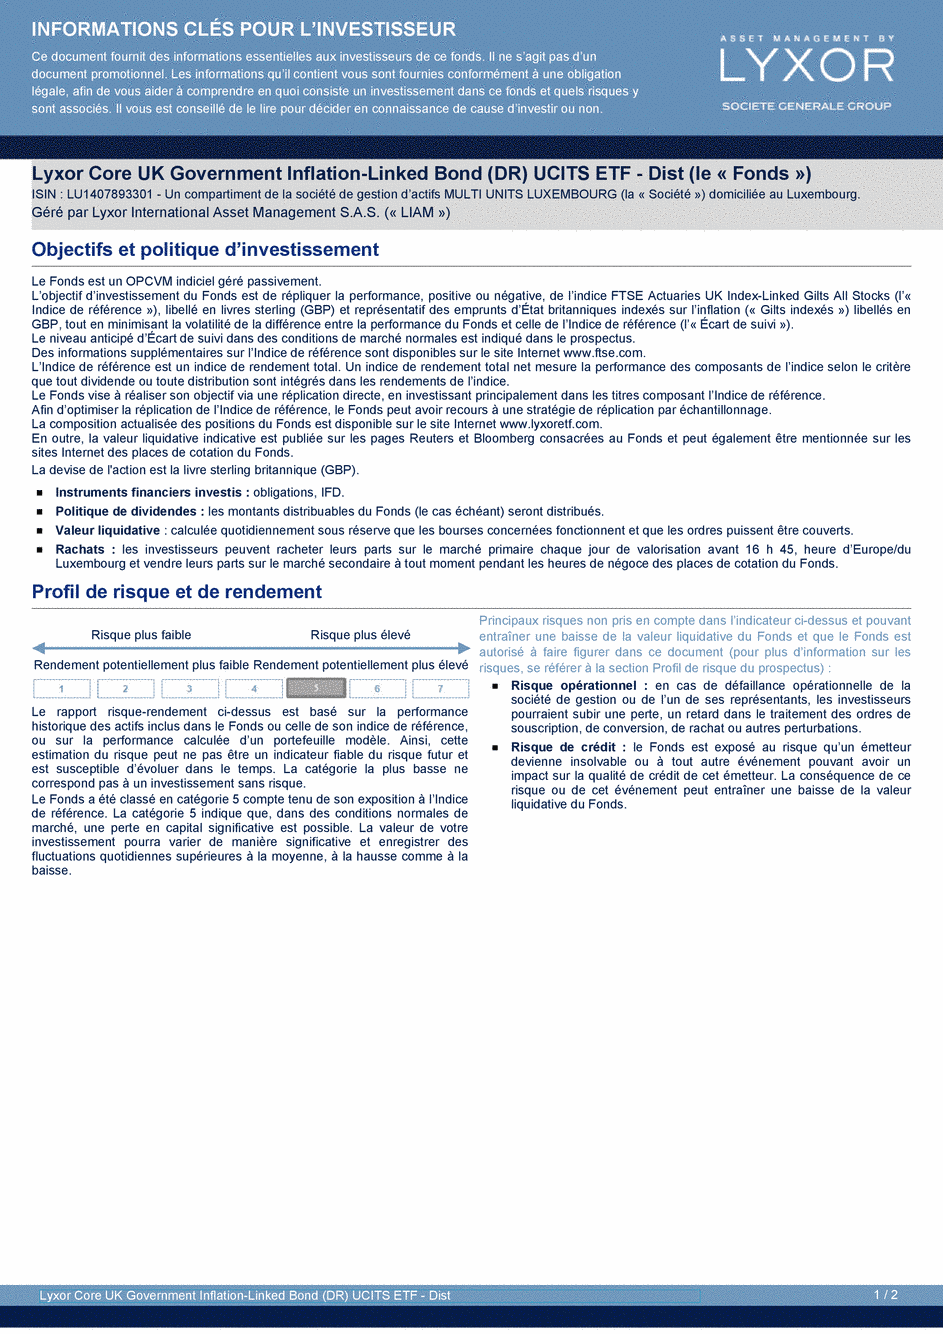 DICI Lyxor Core UK Government Inflation-Linked Bond (DR) UCITS ETF - Dist - 24/02/2021 - Français